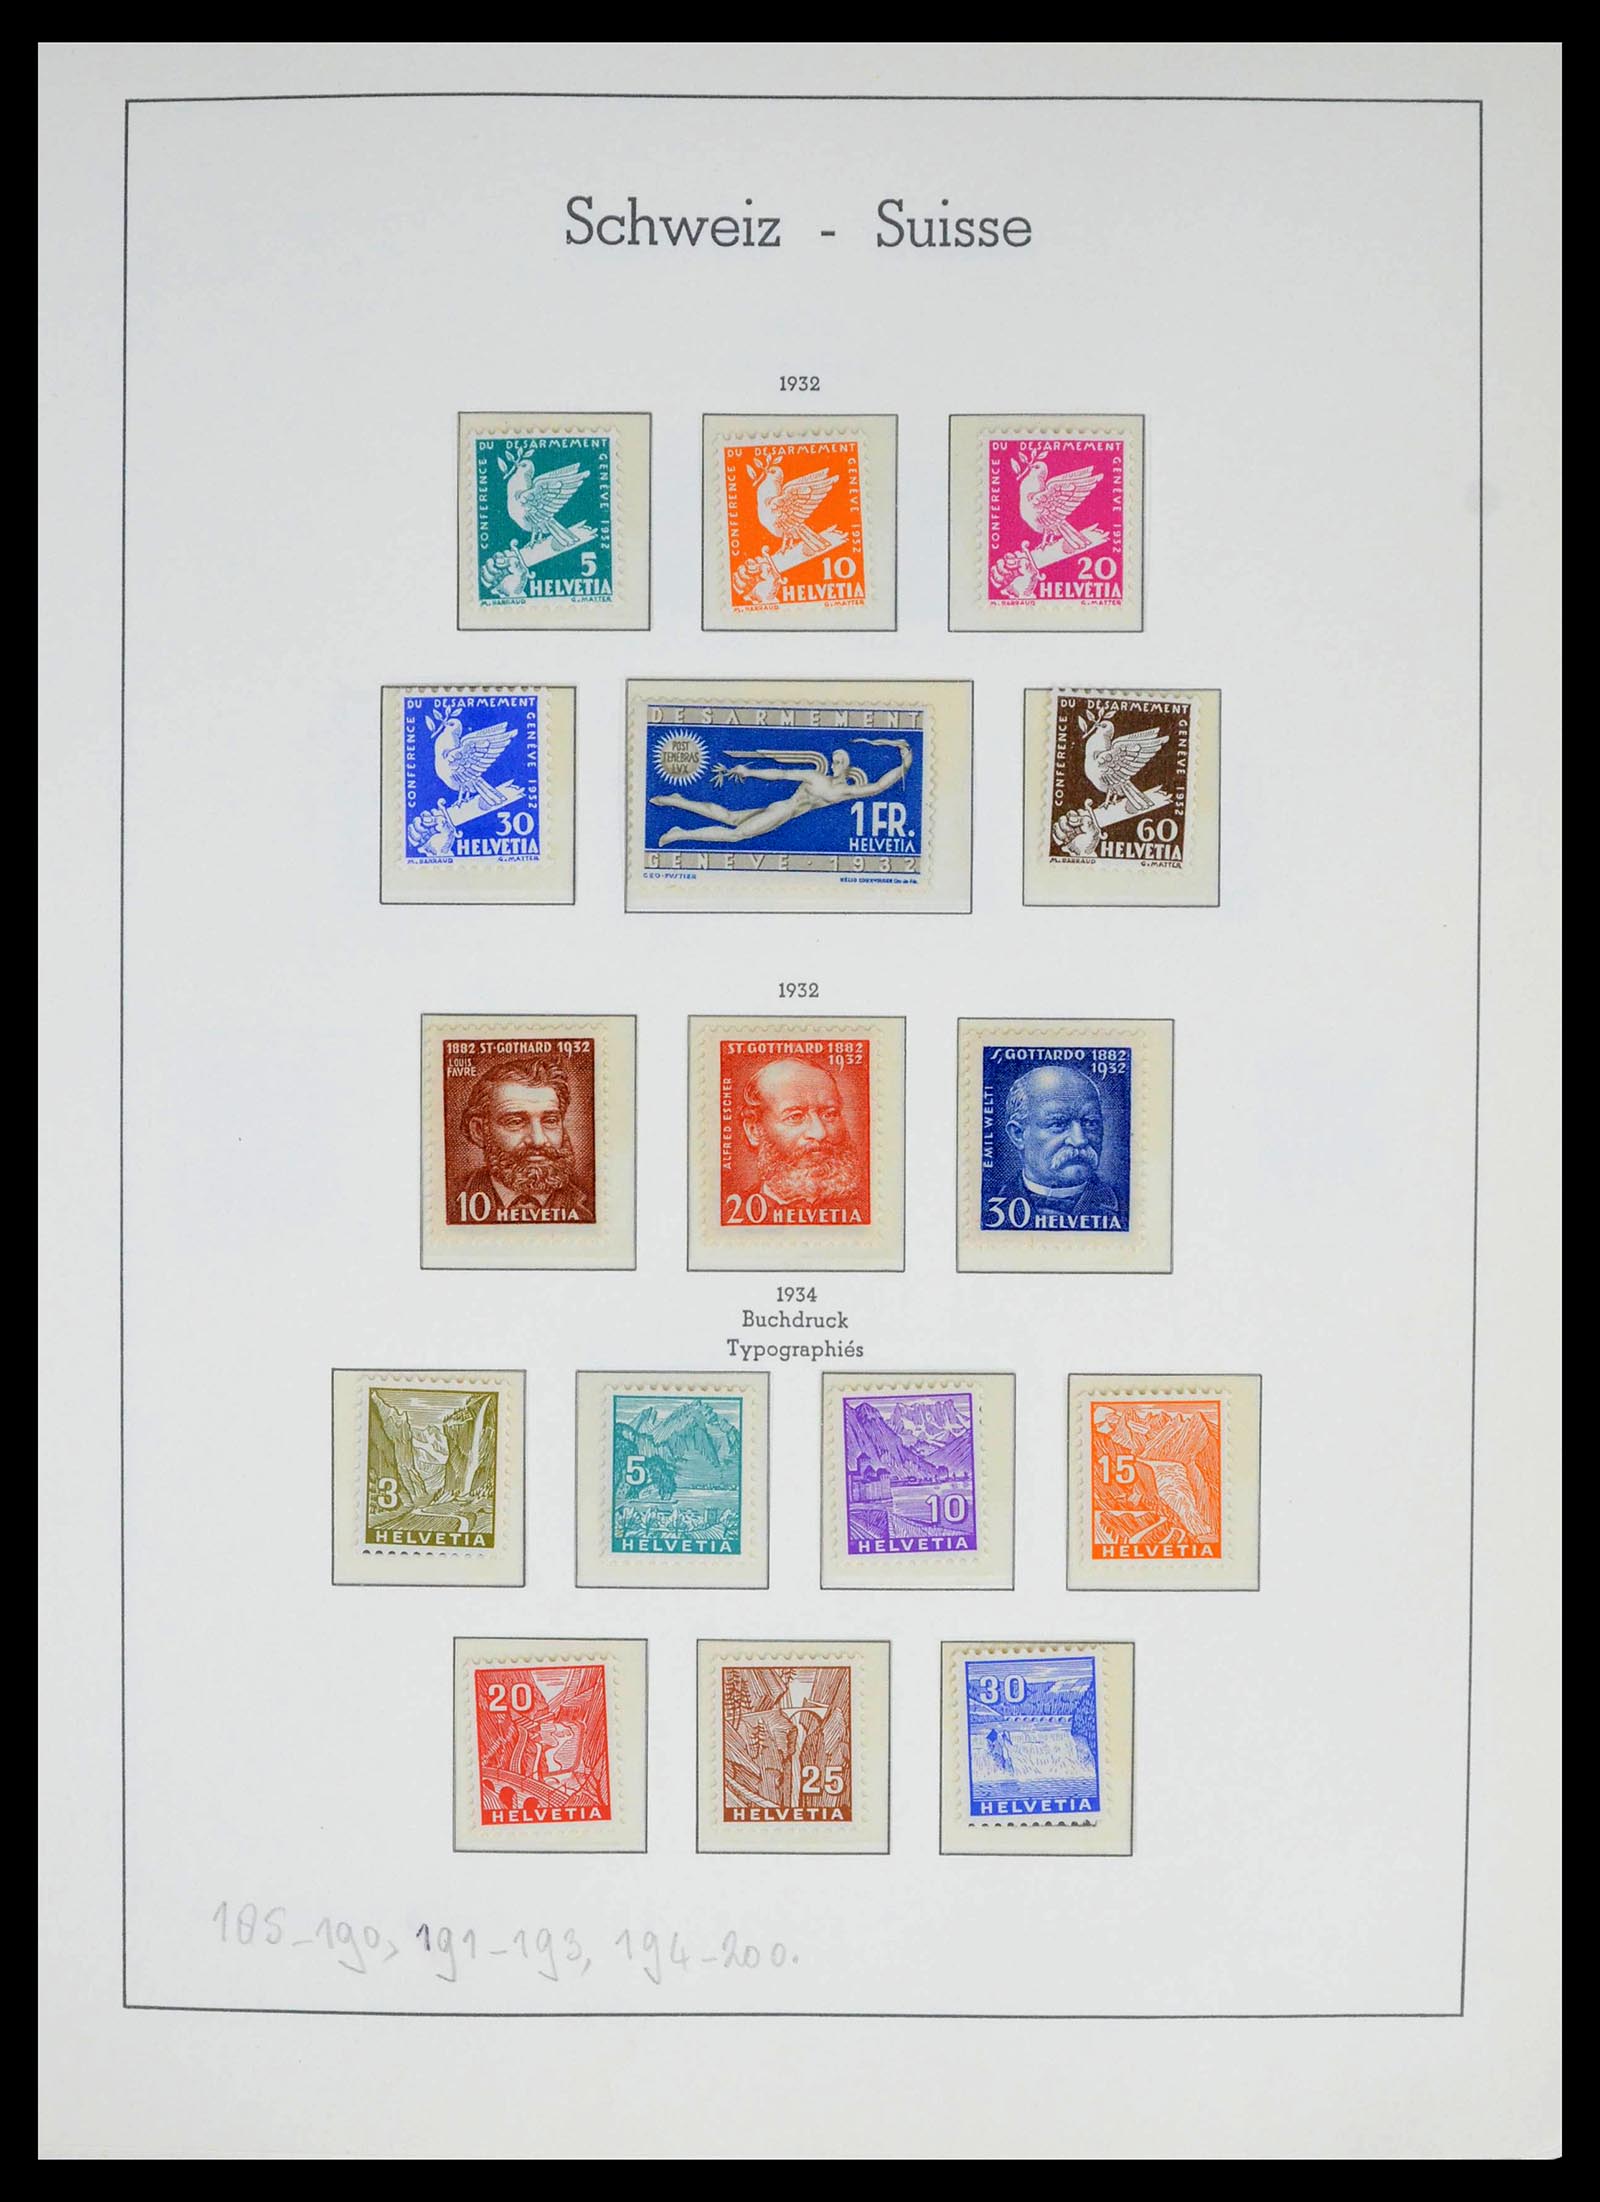 39420 0019 - Stamp collection 39420 Switzerland 1862-1974.